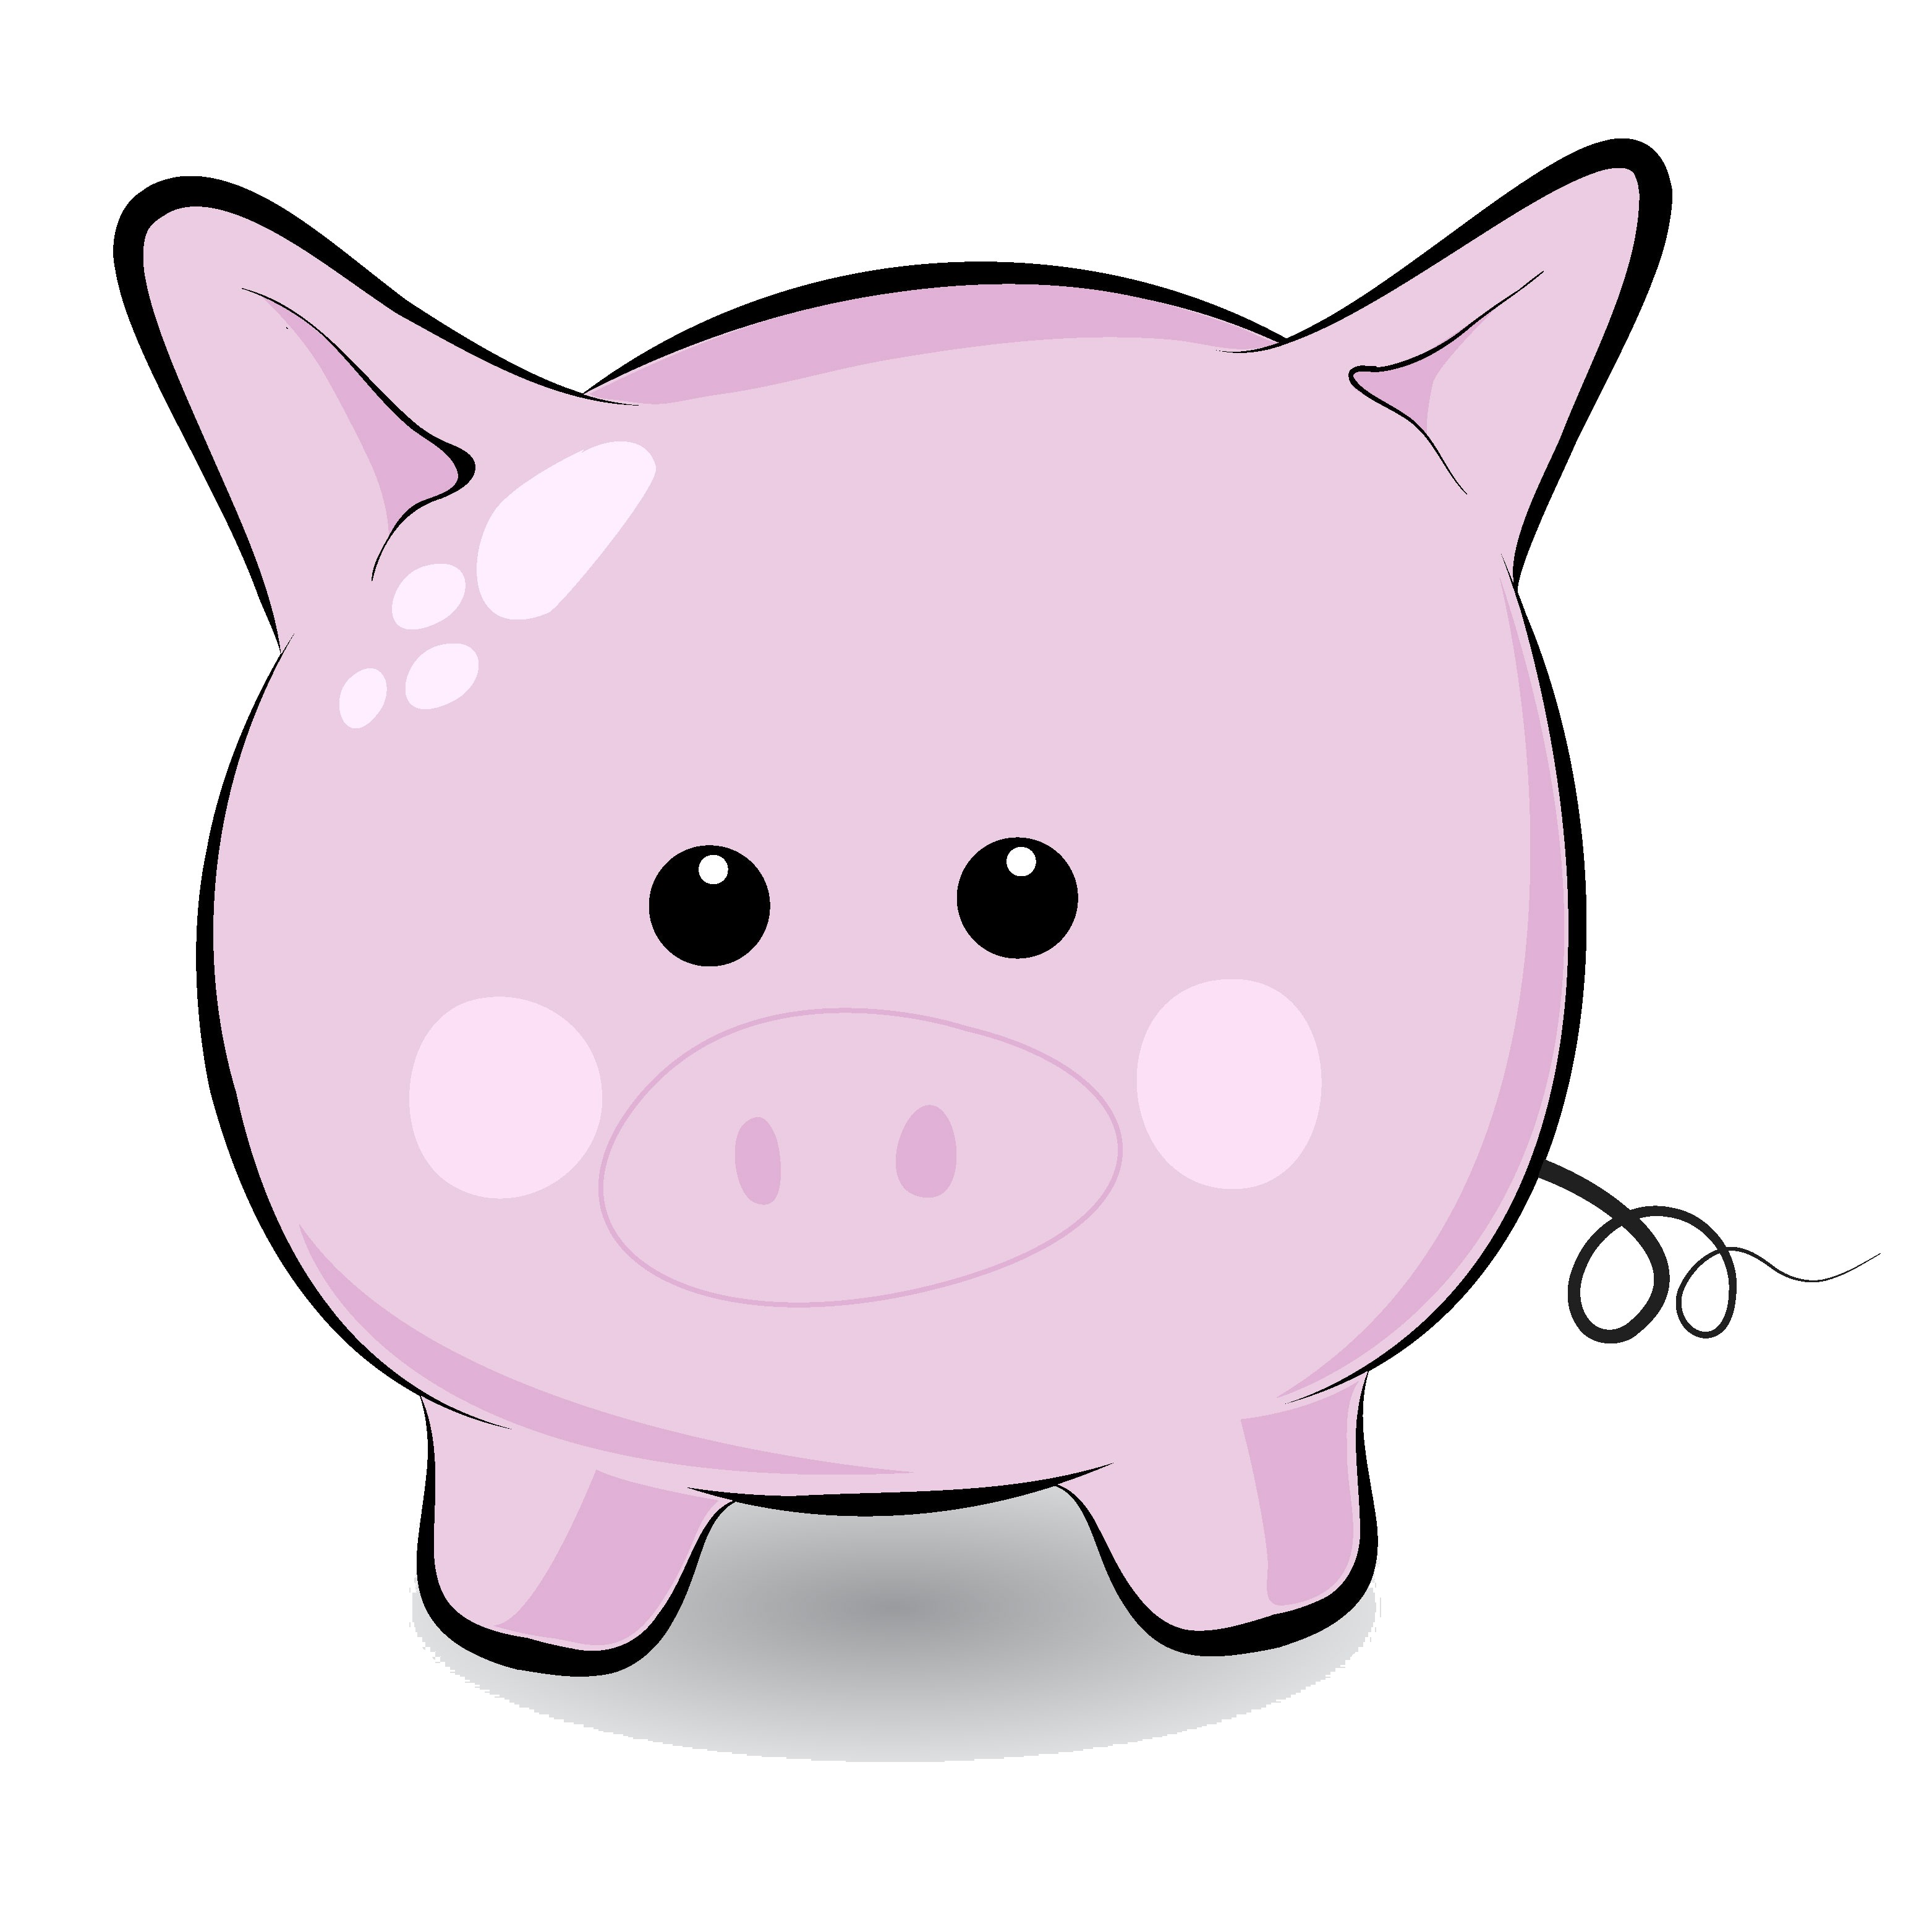 Pig Clip Art Character | Clipart Panda - Free Clipart Images